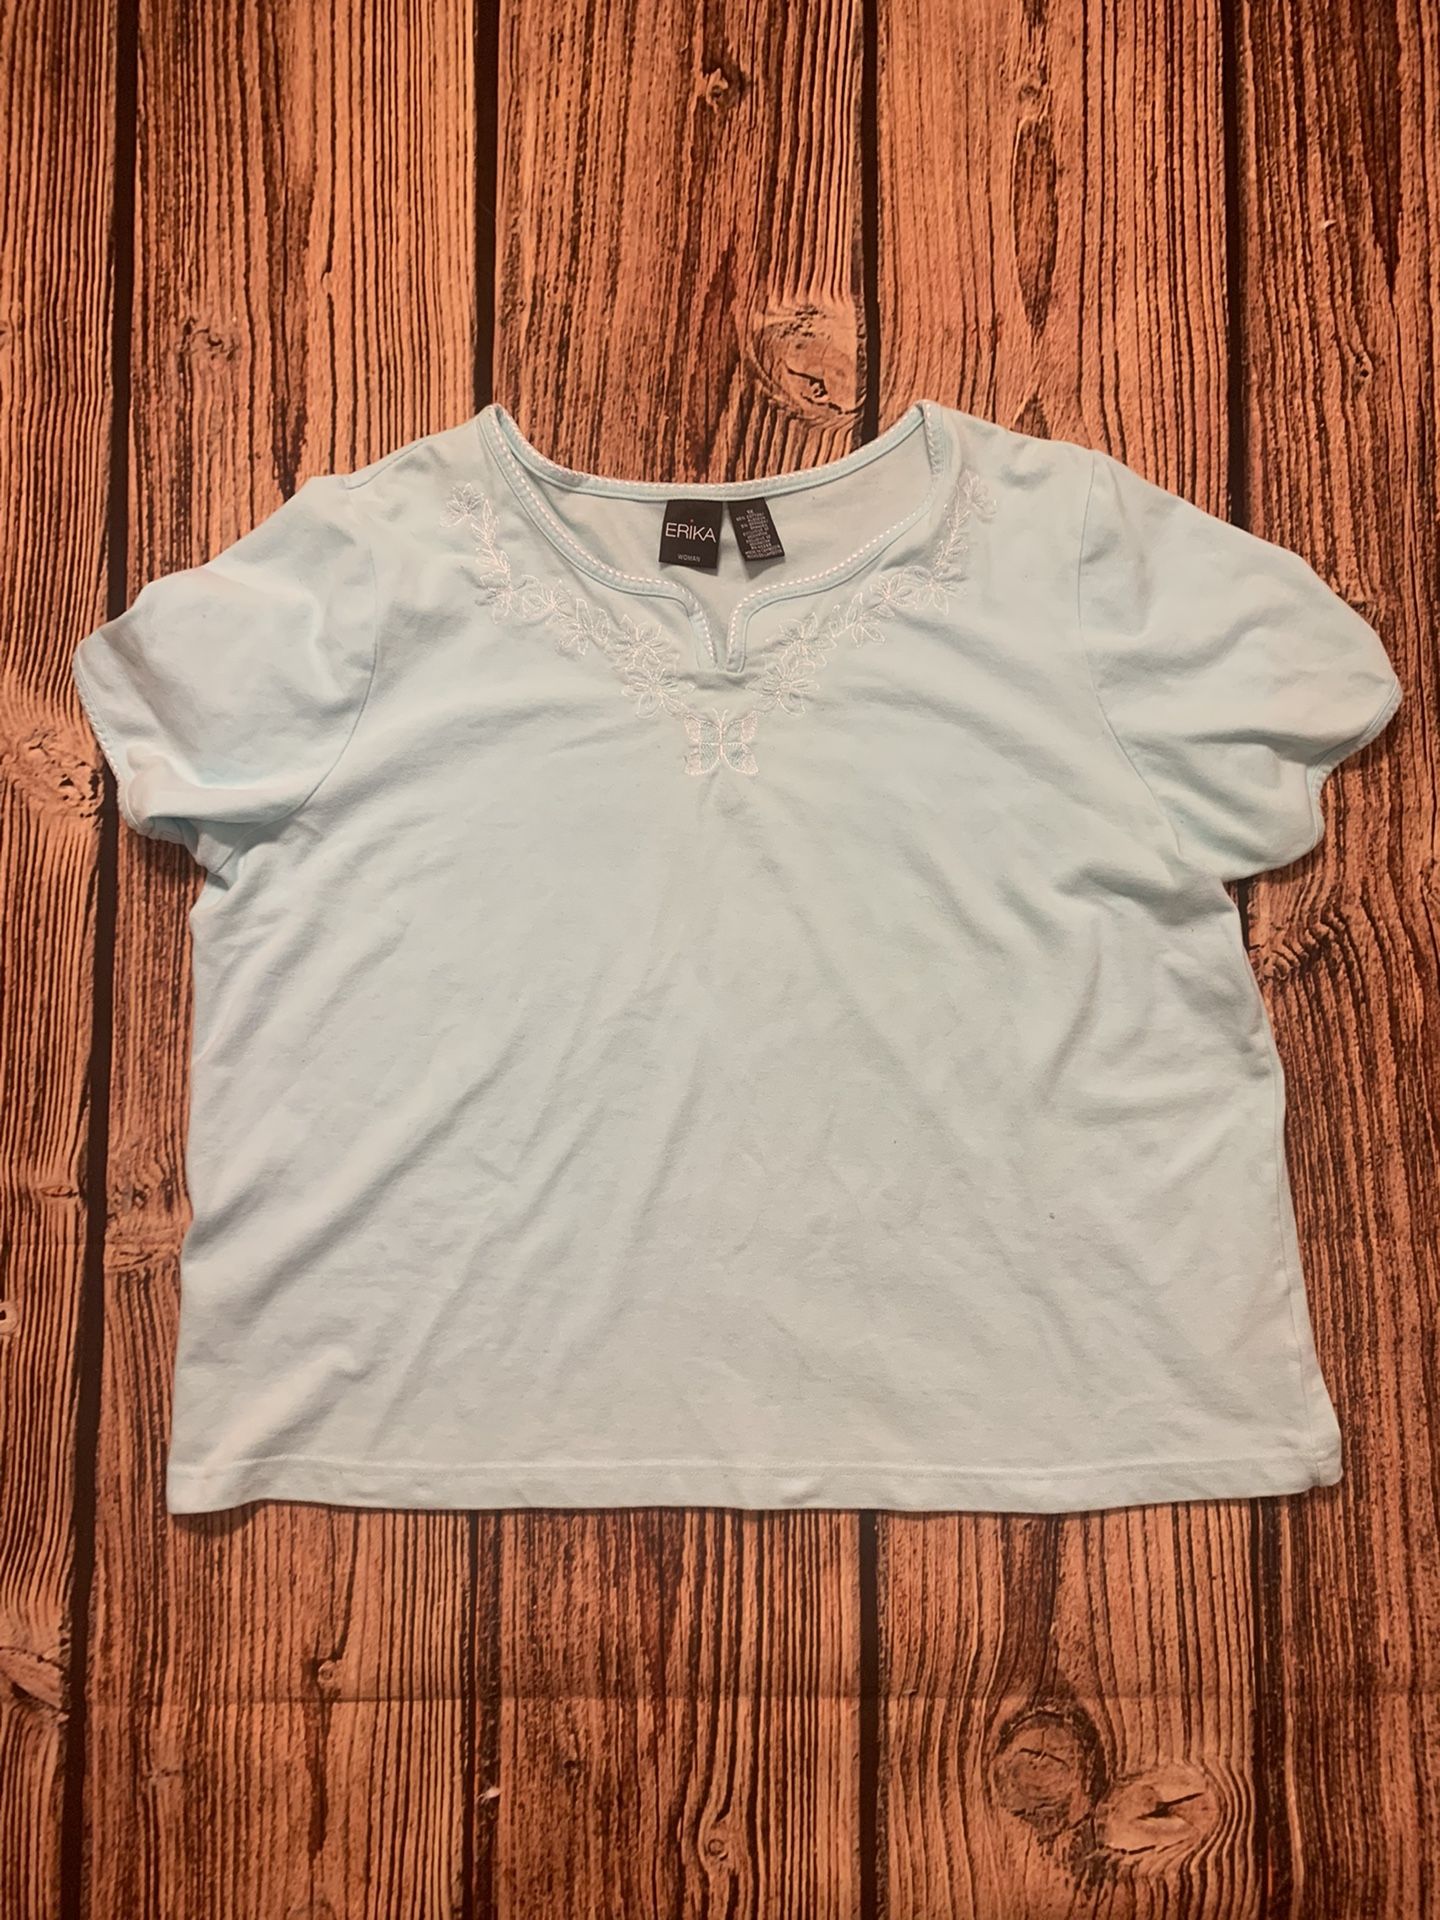 Women’s Medium Shirt